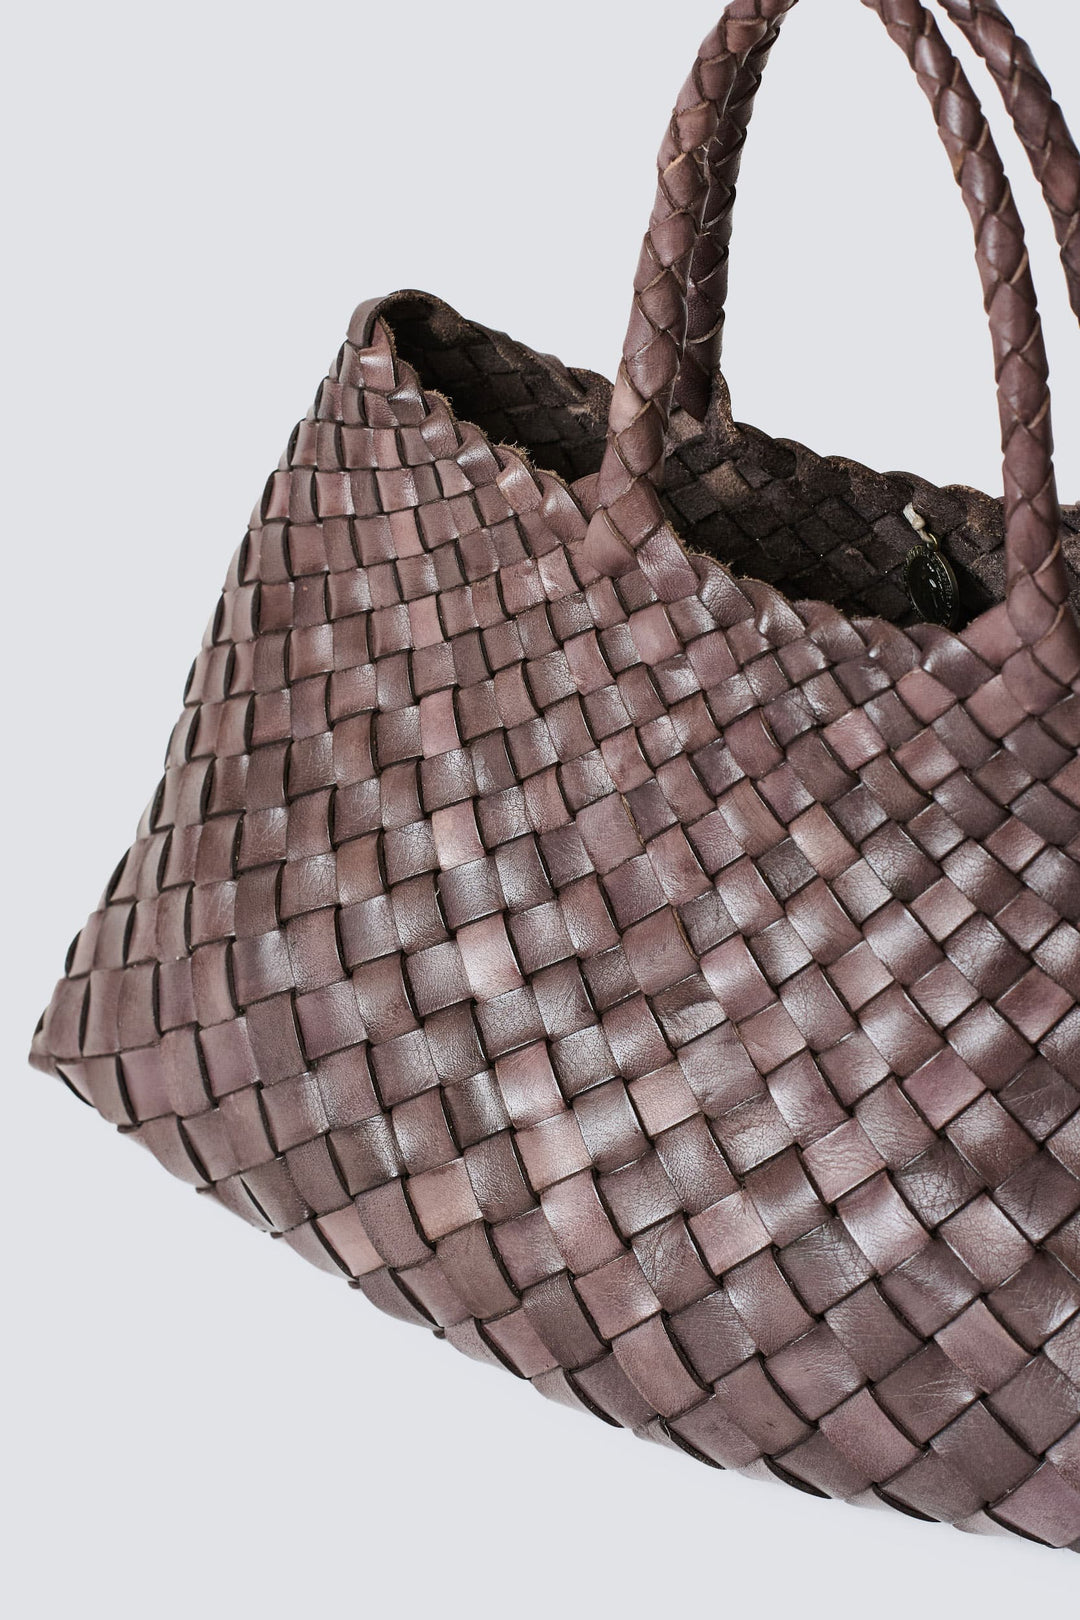 Dragon Diffusion woven leather bag handmade - Santa Croce Small Grey